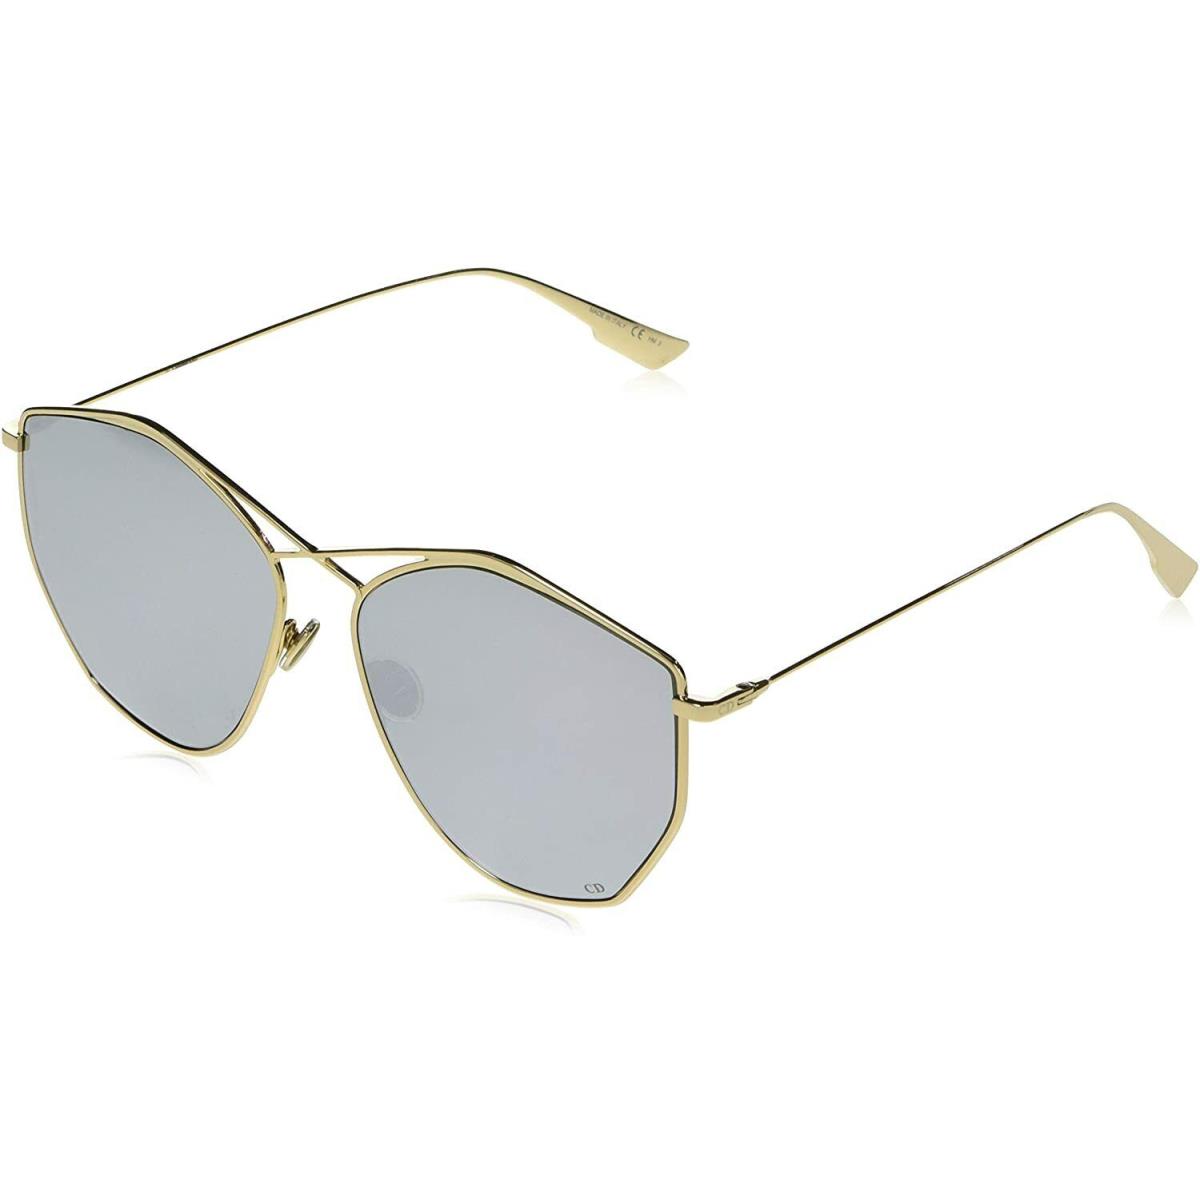 Dior Sunglasses DIORSTELLAIRE4 J5G-DC 59mm Gold / Silver Mirror Lens